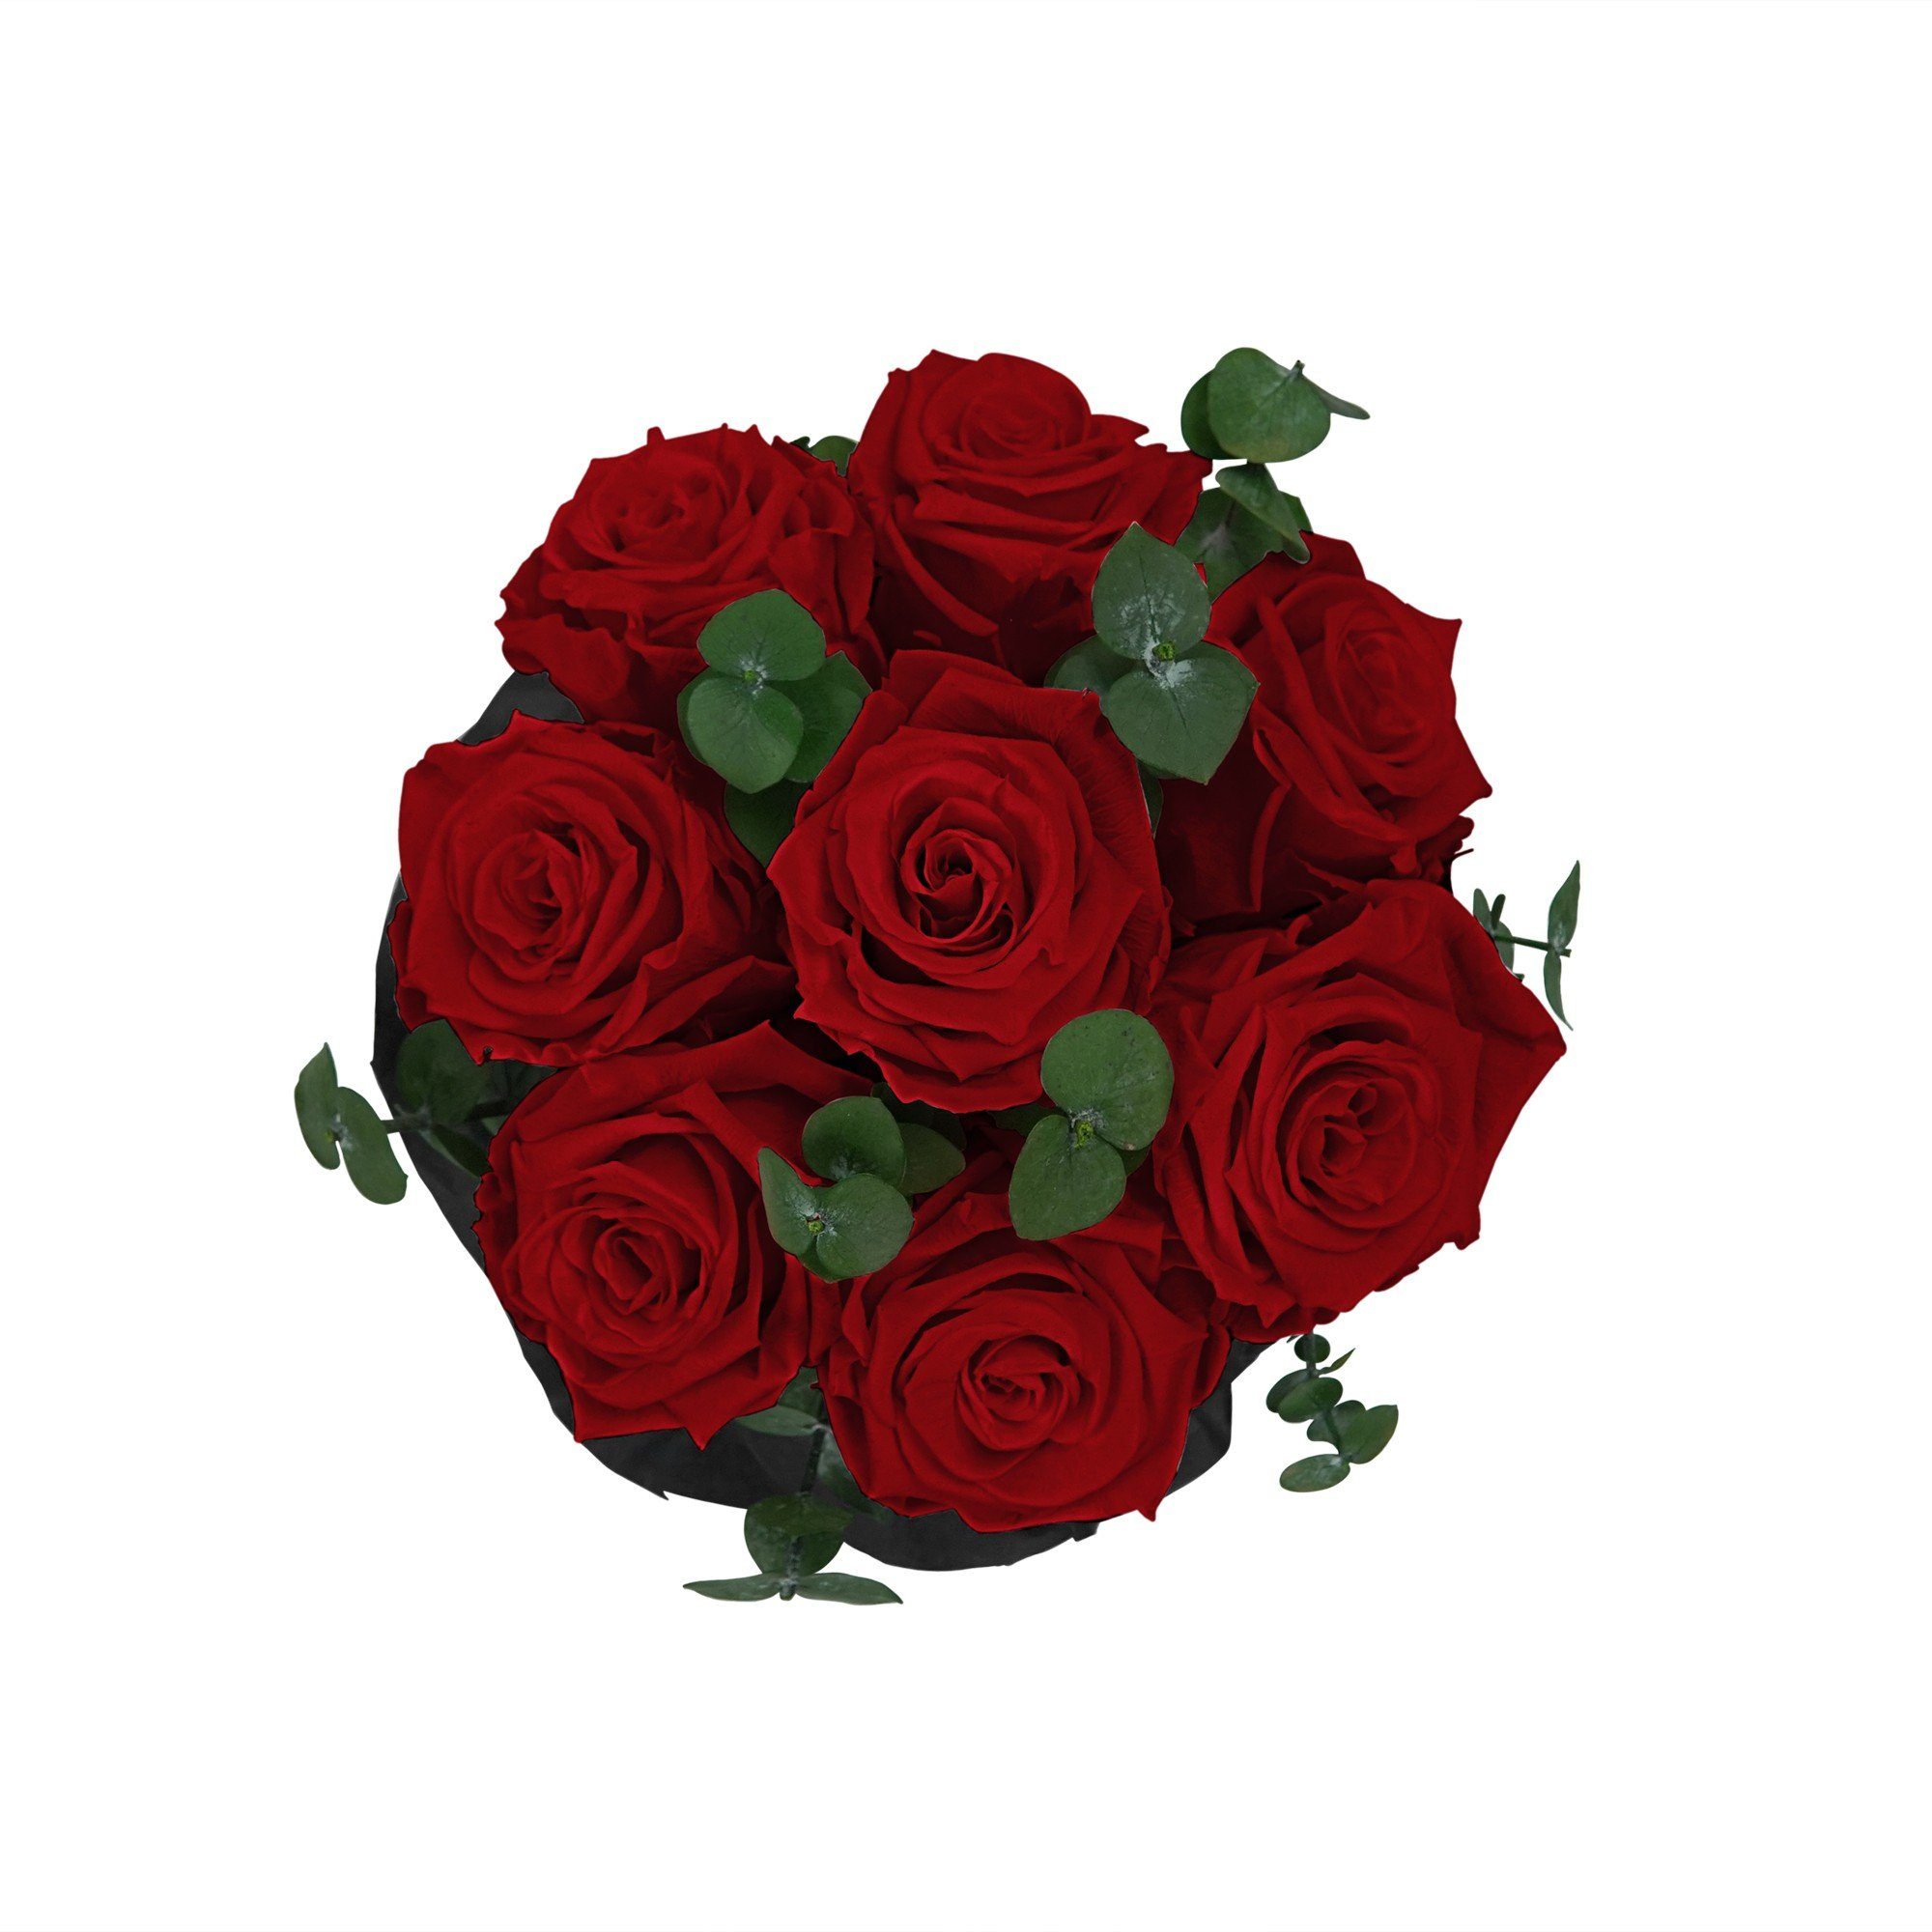 by Raul I Rosenbox Richter Holy Echte, duftende 7-9 haltbar 3 Jahre Bouquet Rose, Infinity I Rot mit konservierte Blumen Flowers Kunstblume I Rosen